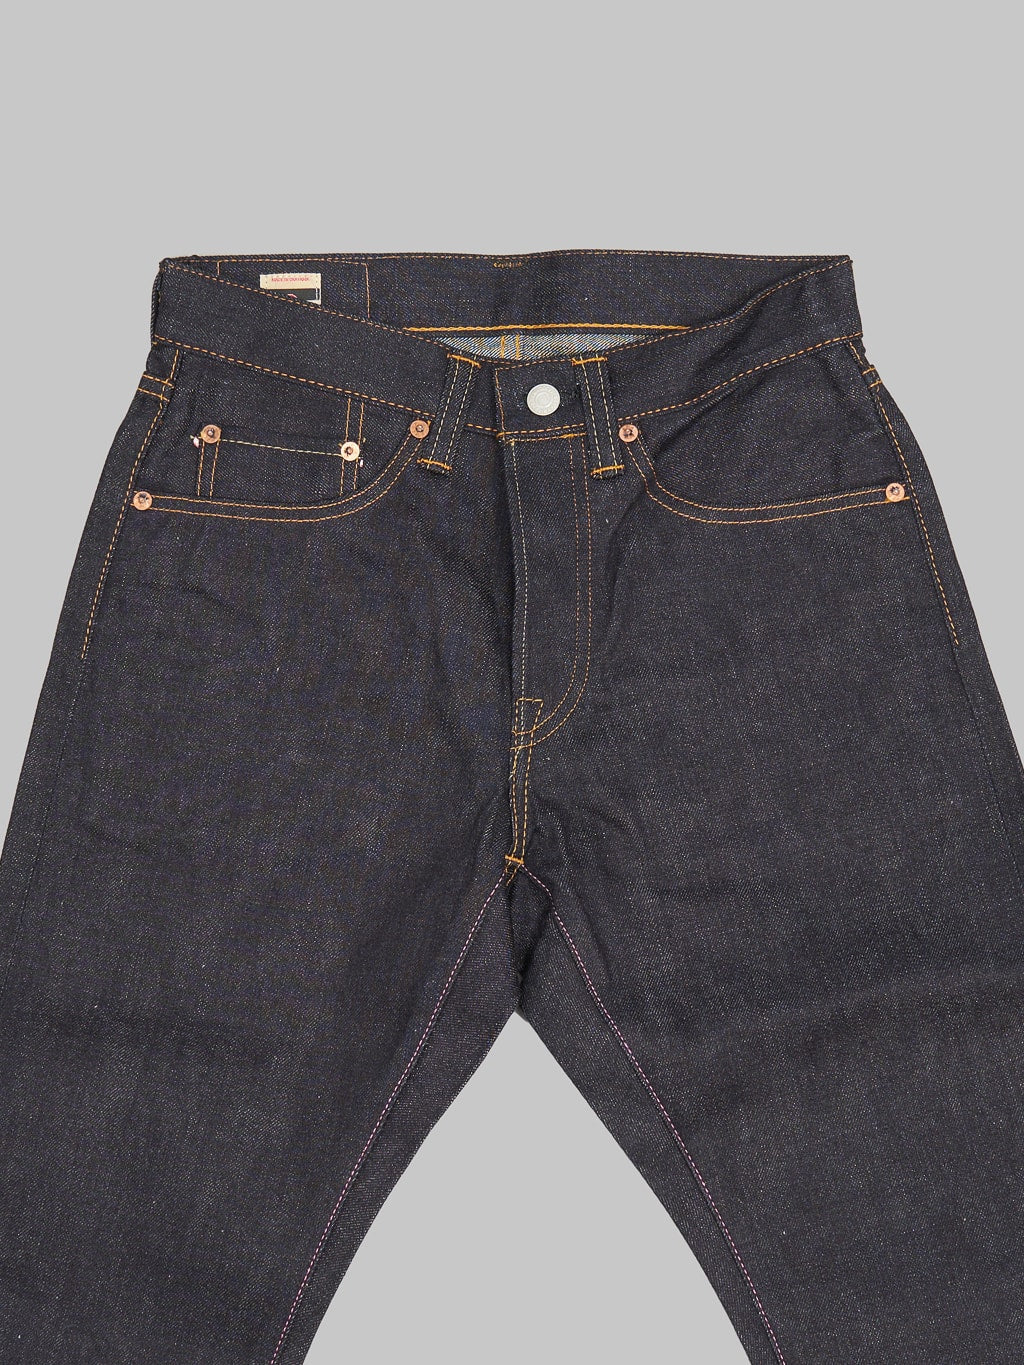 Momotaro 0605 12oz Natural Tapered Jeans waist